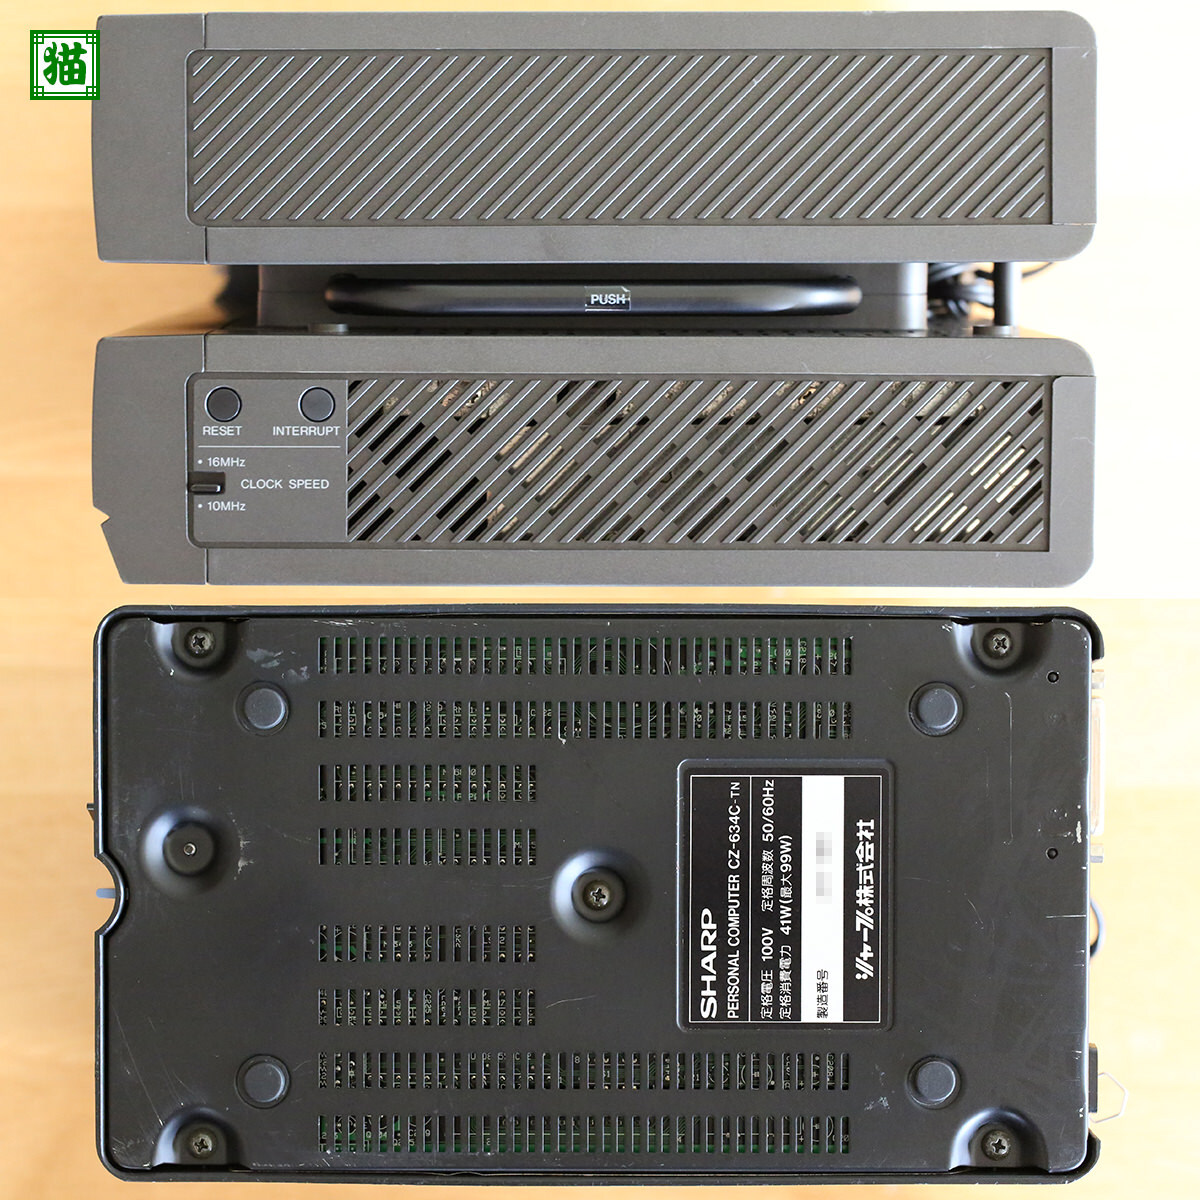 SHARP X68000 XVI CZ-634C-TN RAM:2MB HDD:なし 静音ファン搭載【オーバーホール済・送料無料】_X68000 XVI 天面・底面 状態確認用